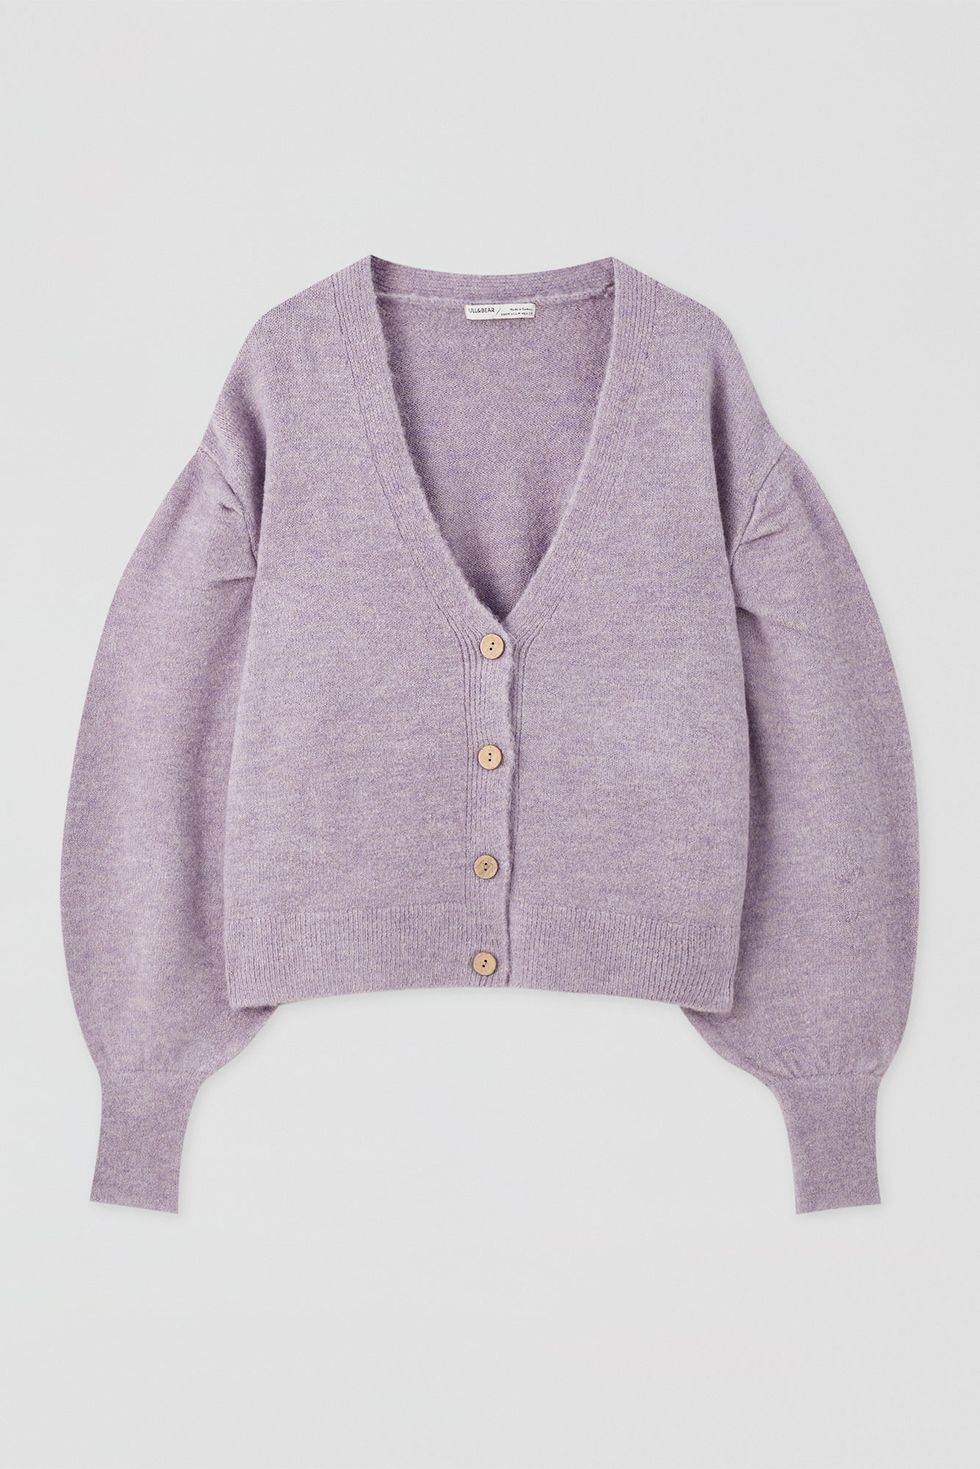 Clothing, Outerwear, Sweater, Sleeve, Cardigan, Purple, Violet, Pink, Woolen, Jacket, 